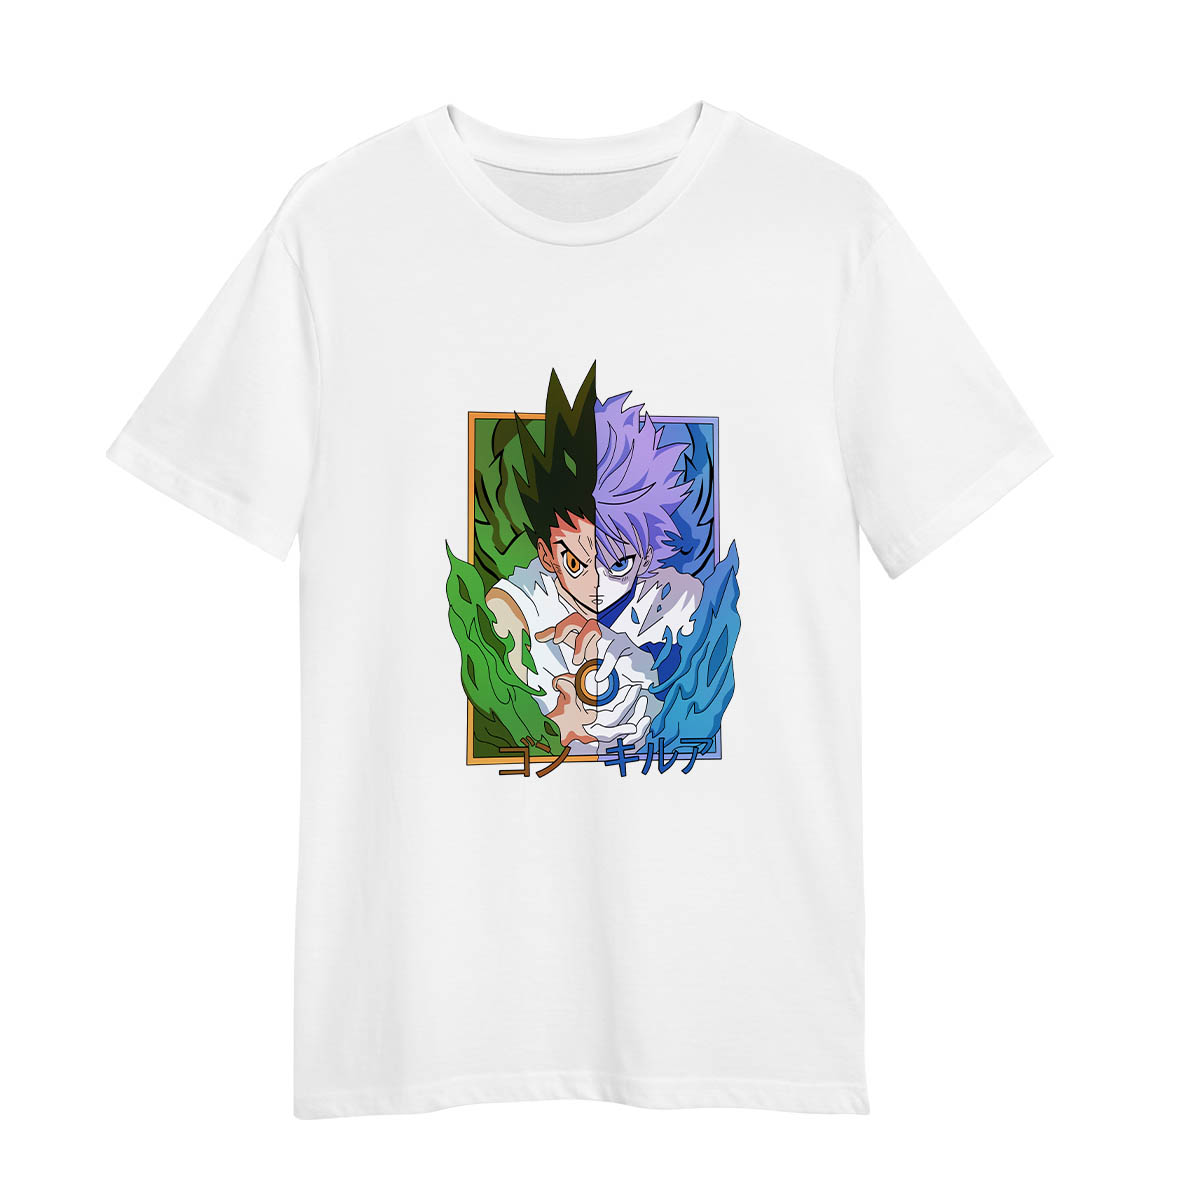 Gon Freecss And Killua Zoldyck Hunter x Hunter Anime Manga Adult Unisex White T-shirt